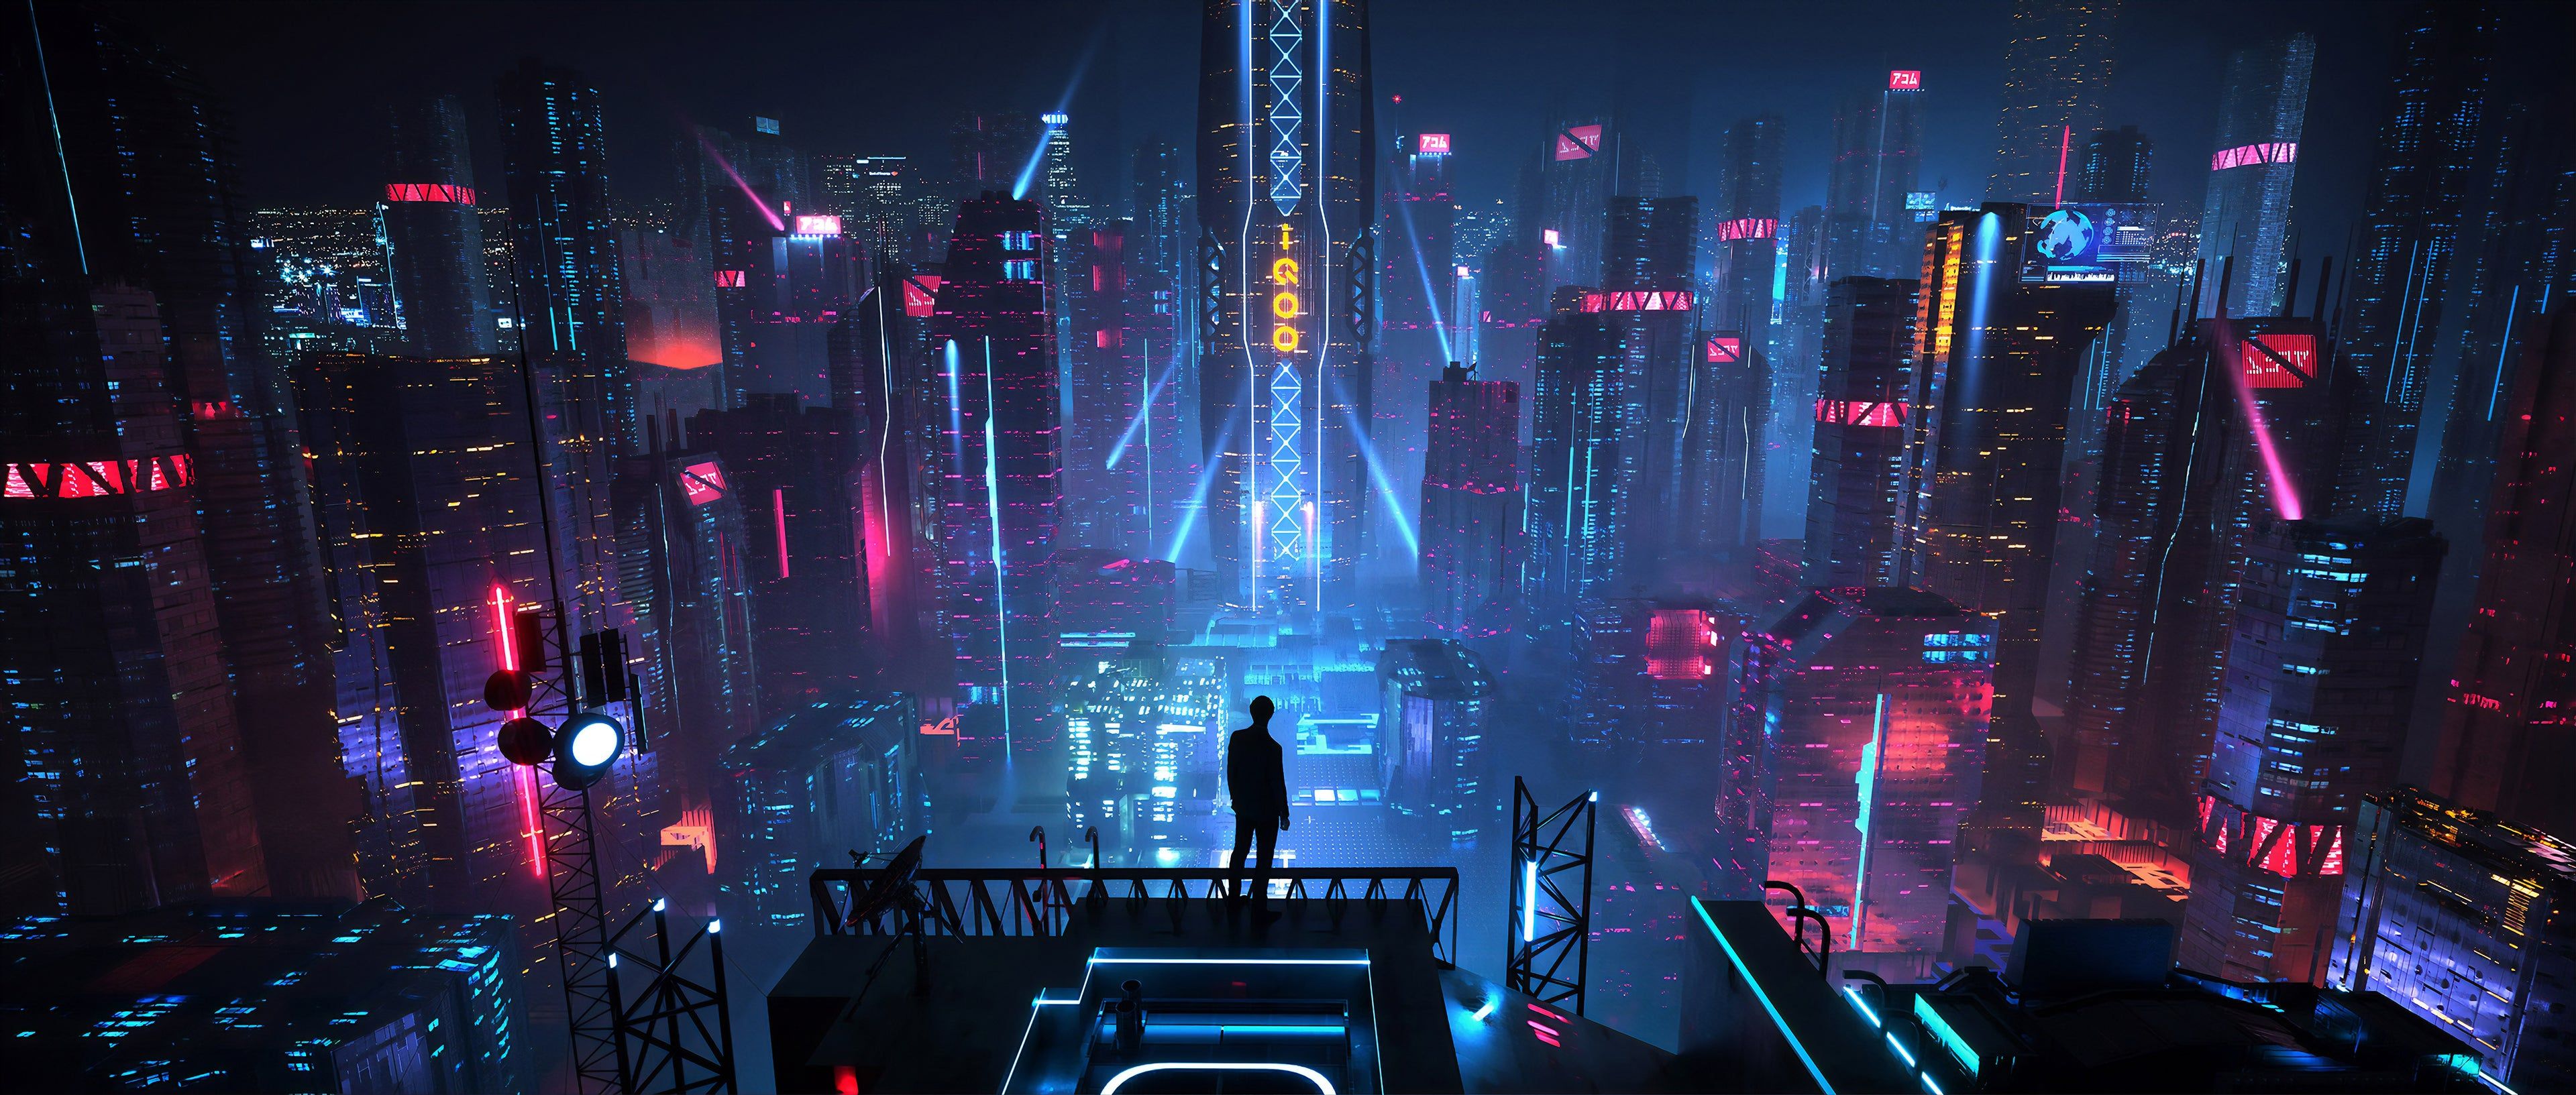 100+] Cyberpunk Night City Wallpapers